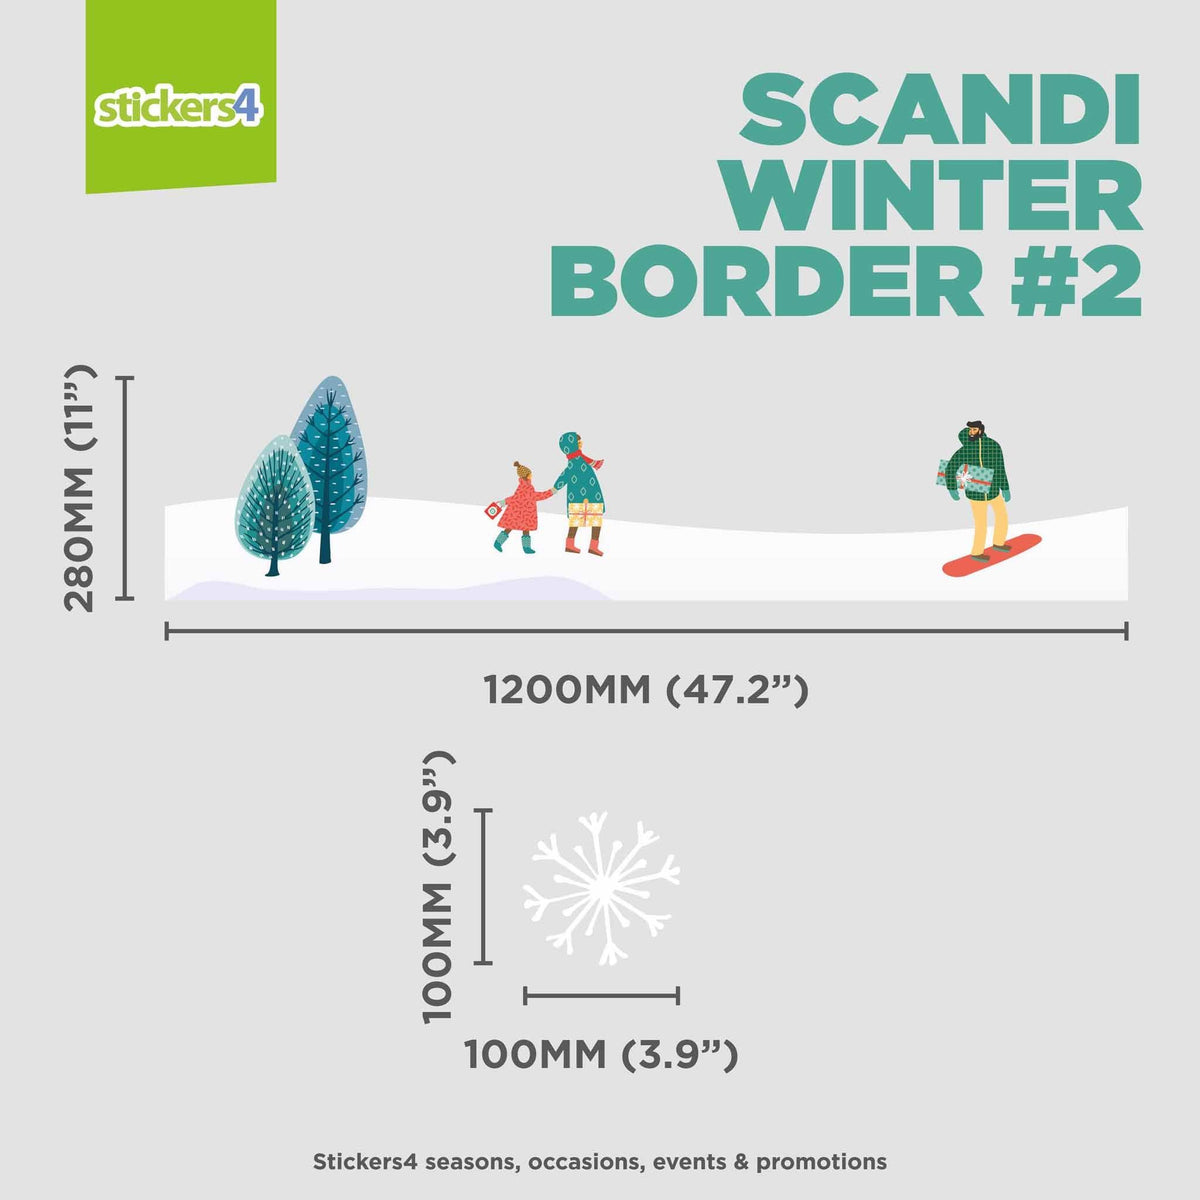 Scandi Winter Border #2 Window Sticker with 36 Snowflakes Christmas Window Display